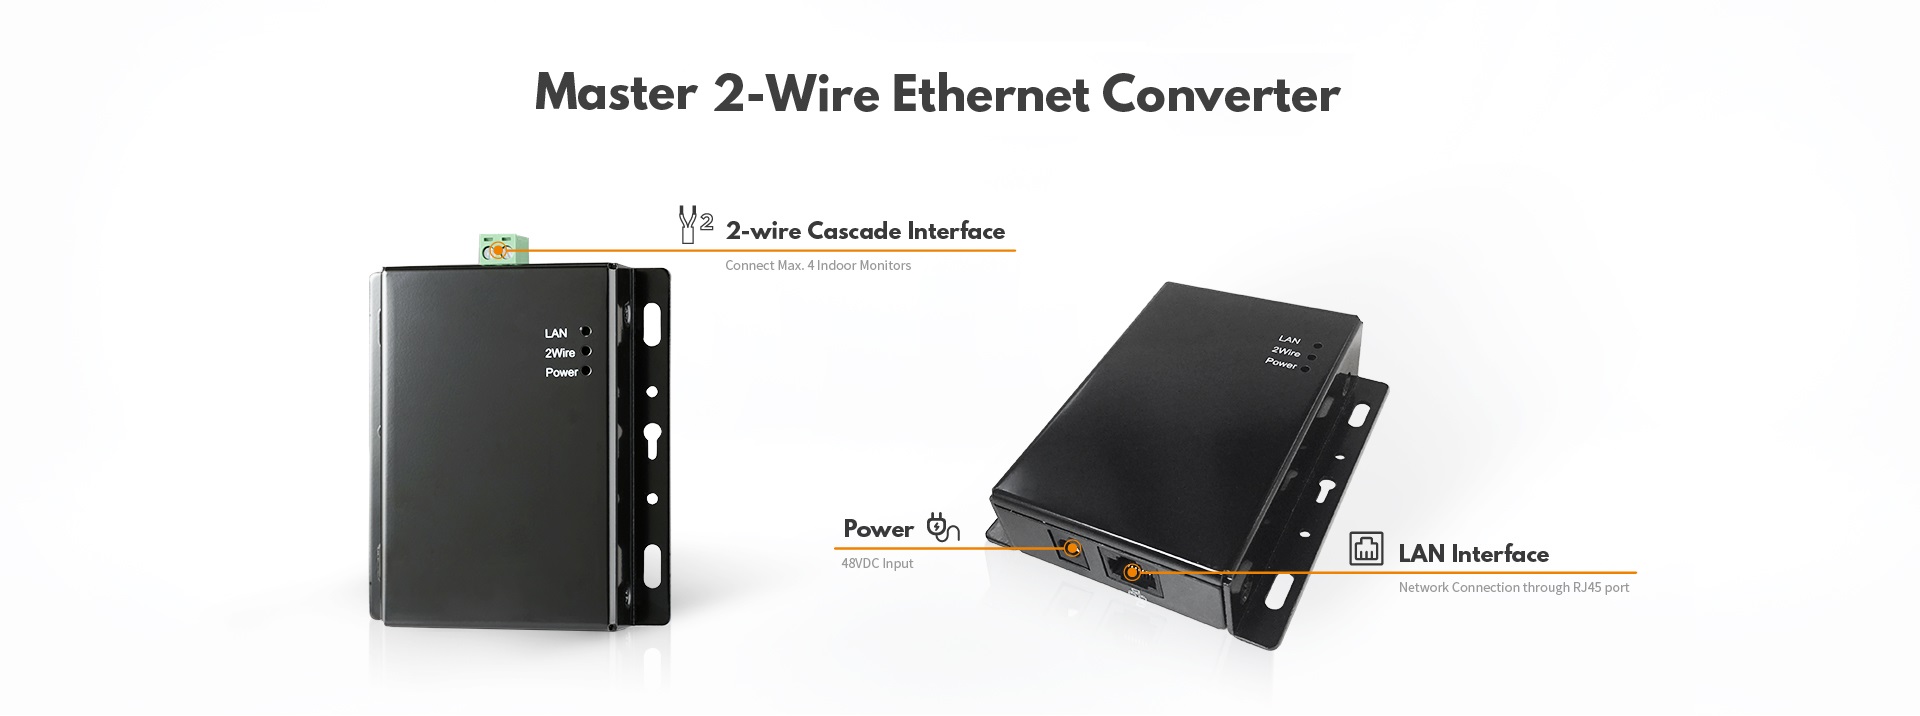 Majstra 2-drata Ethernet-Konvertilo